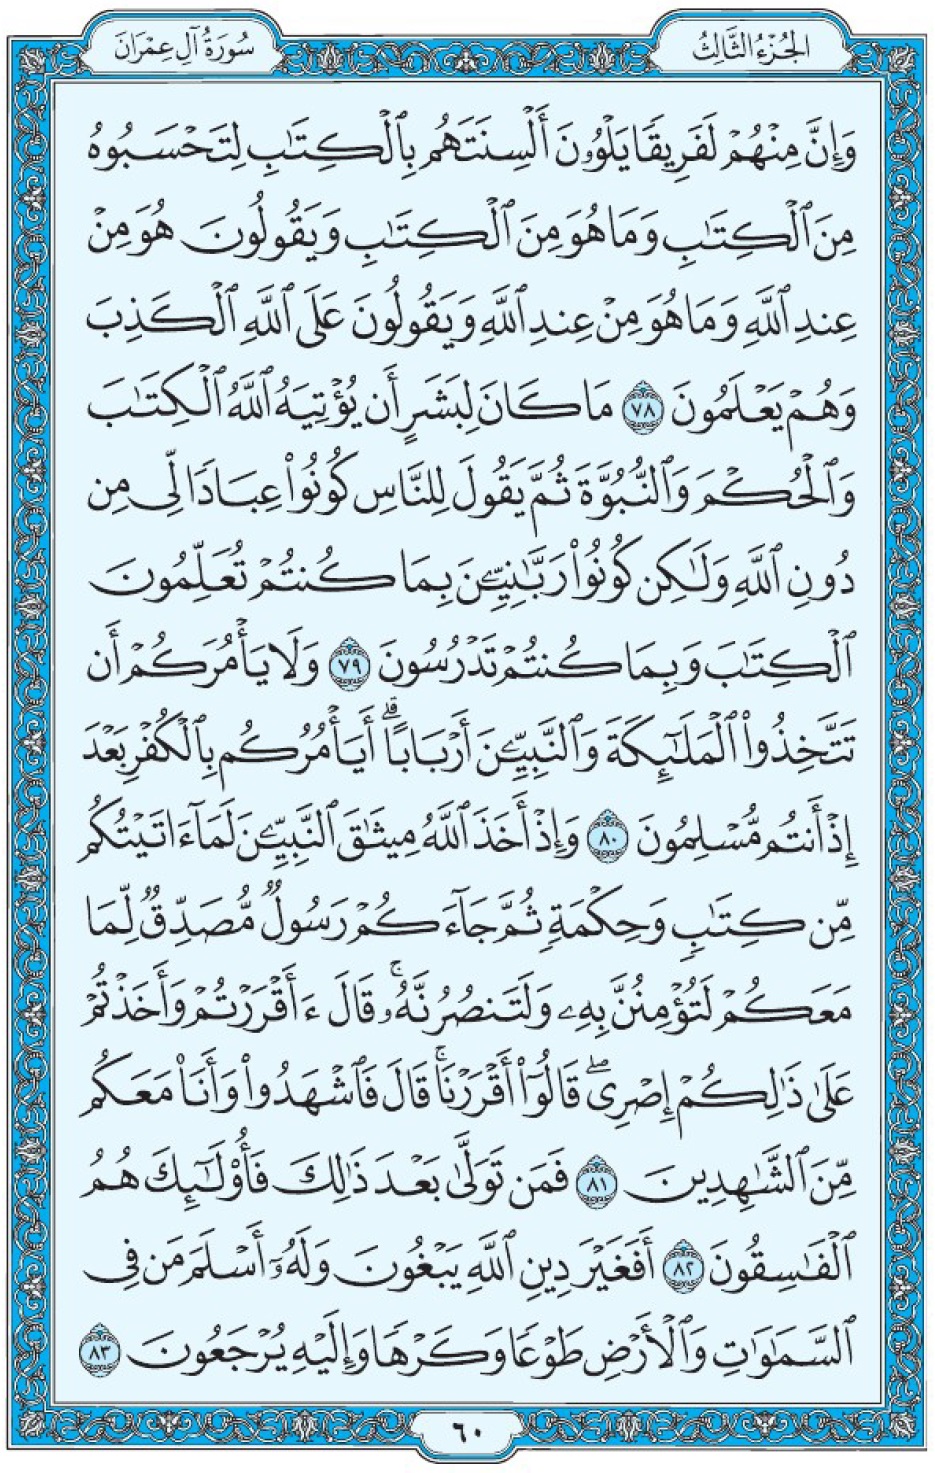 Коран Мединский мусхаф страница 60, Али Имран, аят 78-83